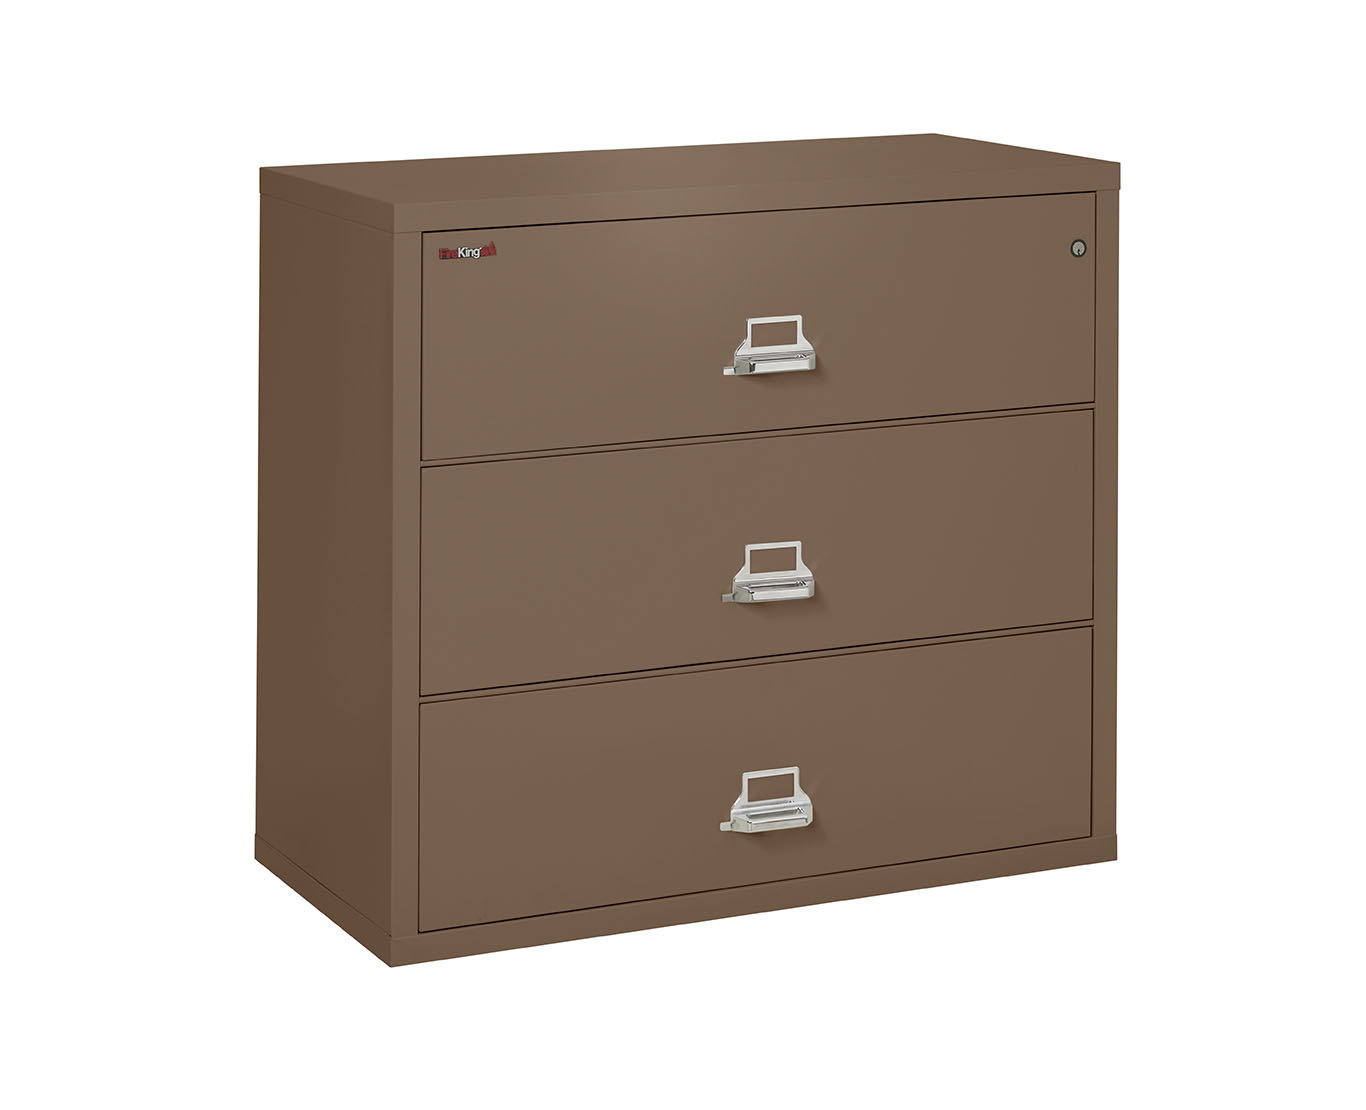 Fireking Fireproof Lateral File Cabinet 3 4422 C 3 Drawer 44 W regarding proportions 1366 X 1110